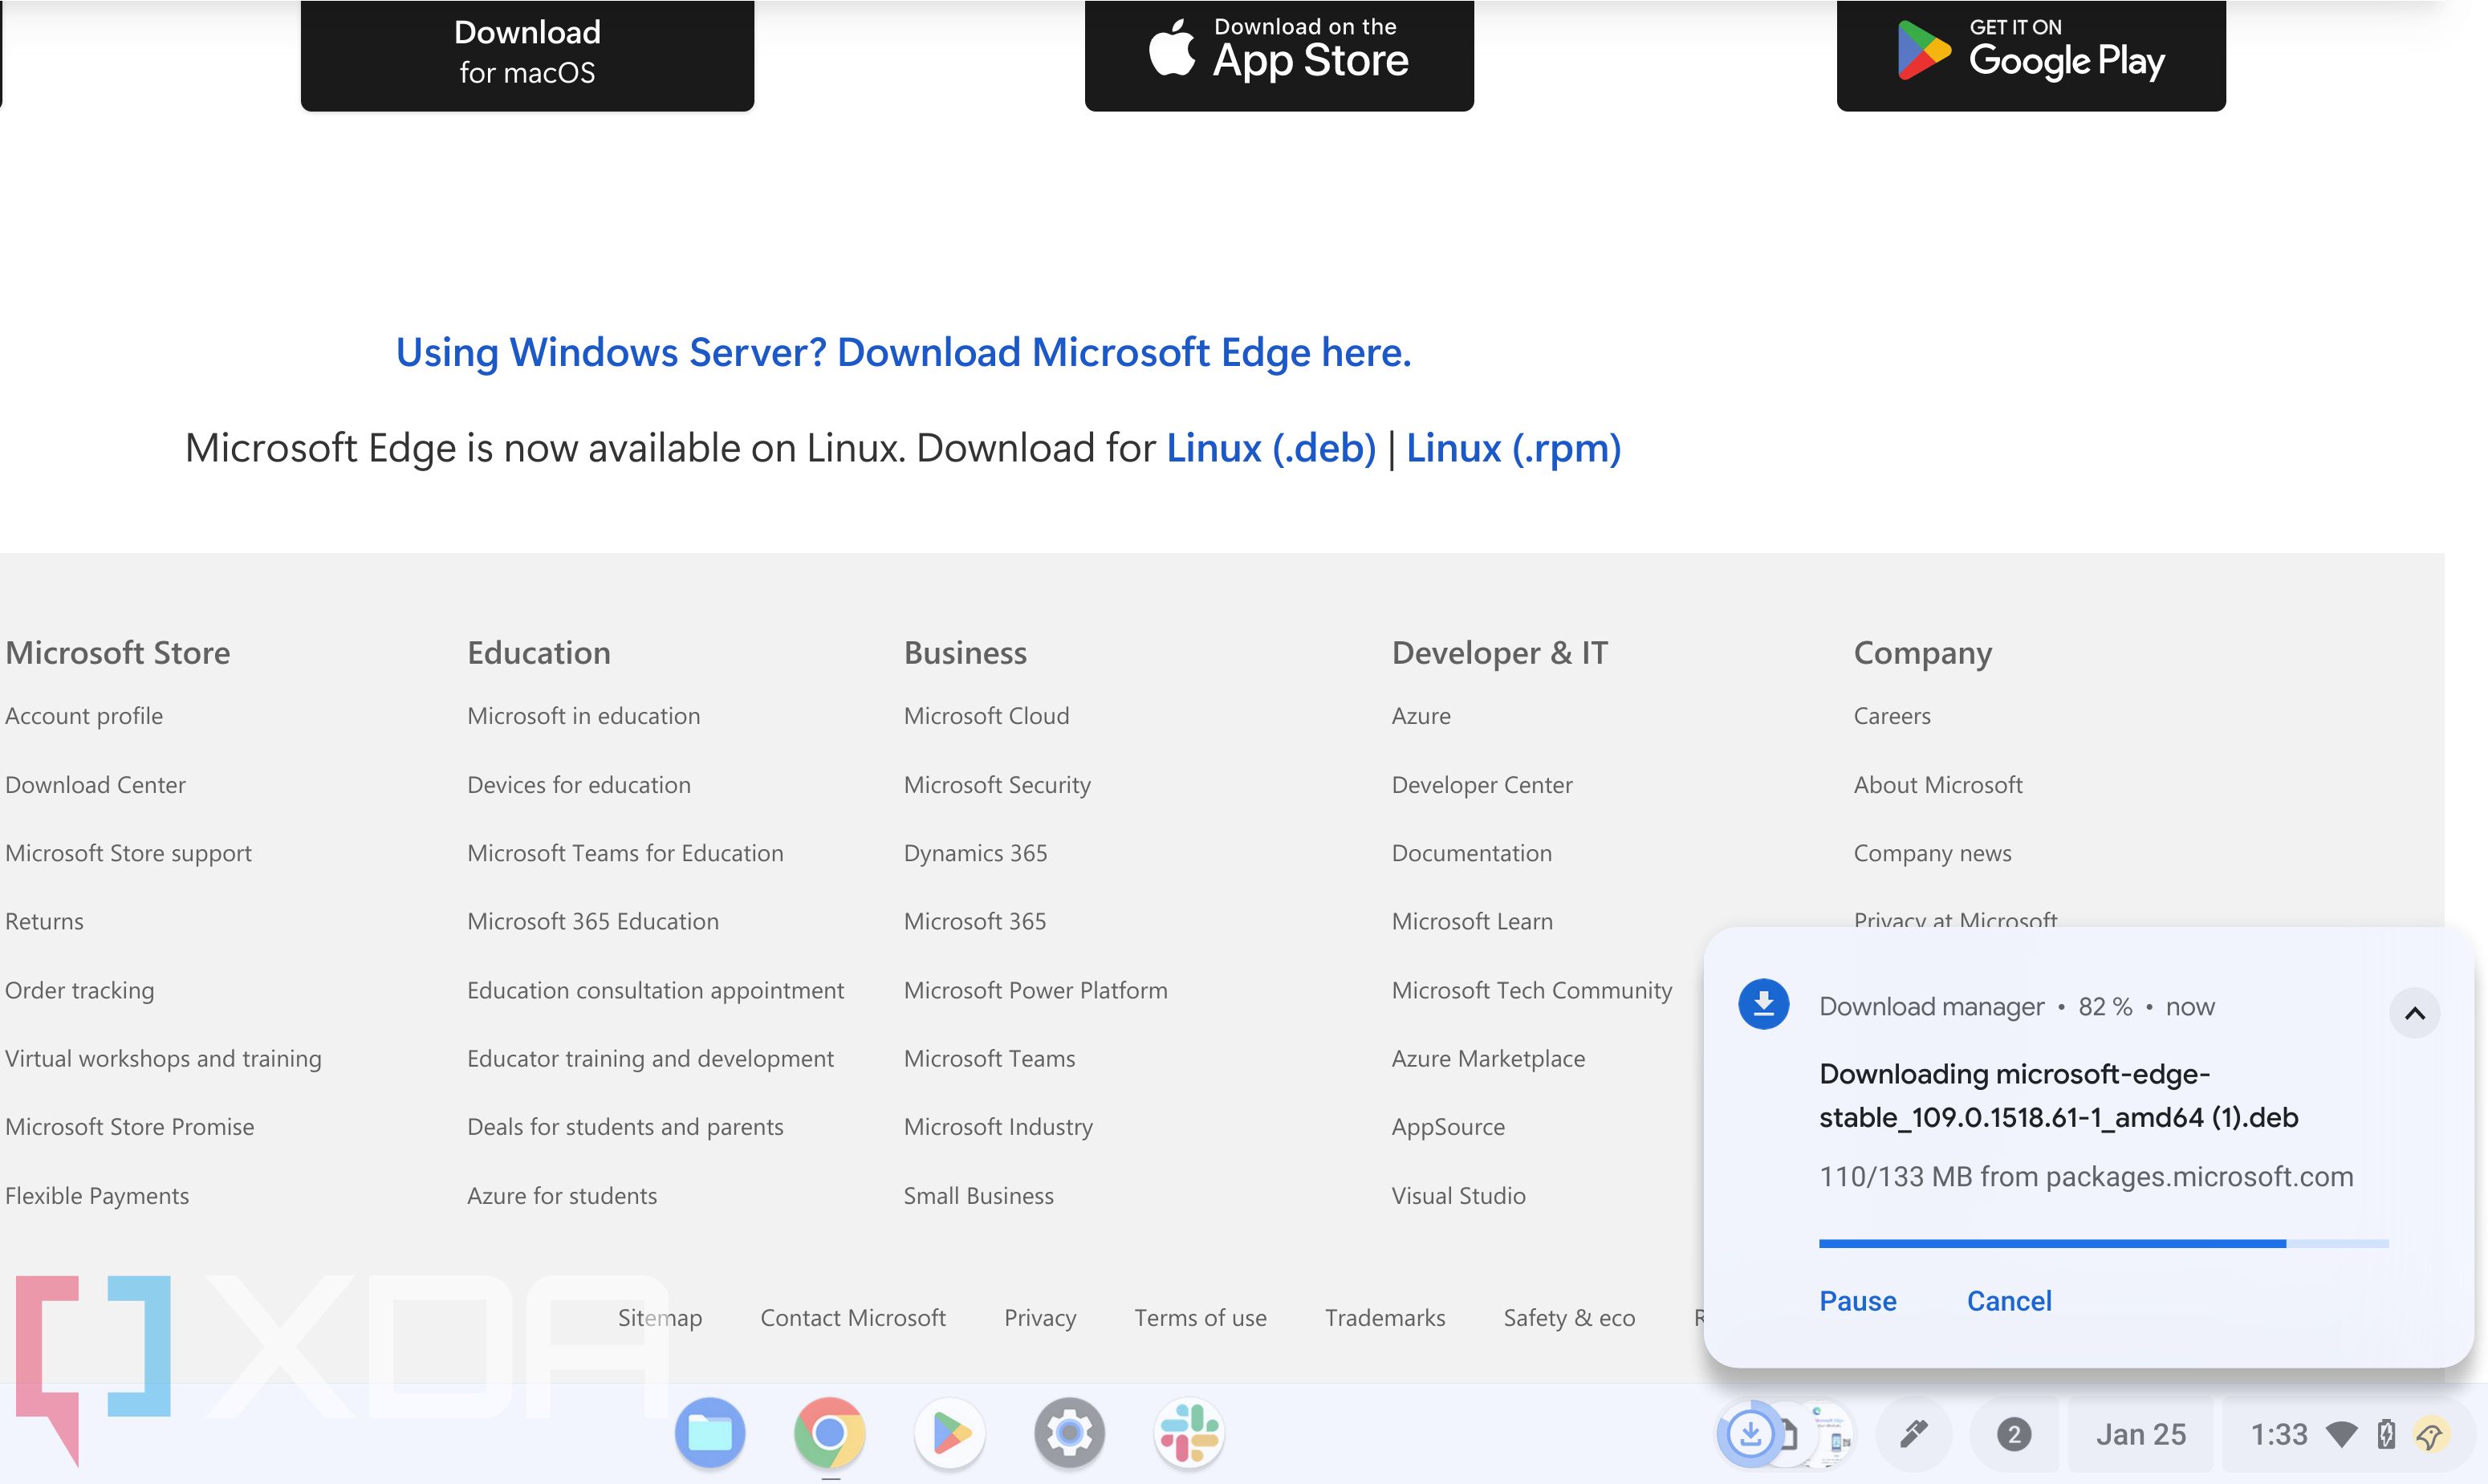 Downloading Microsoft Edge on Linux notification